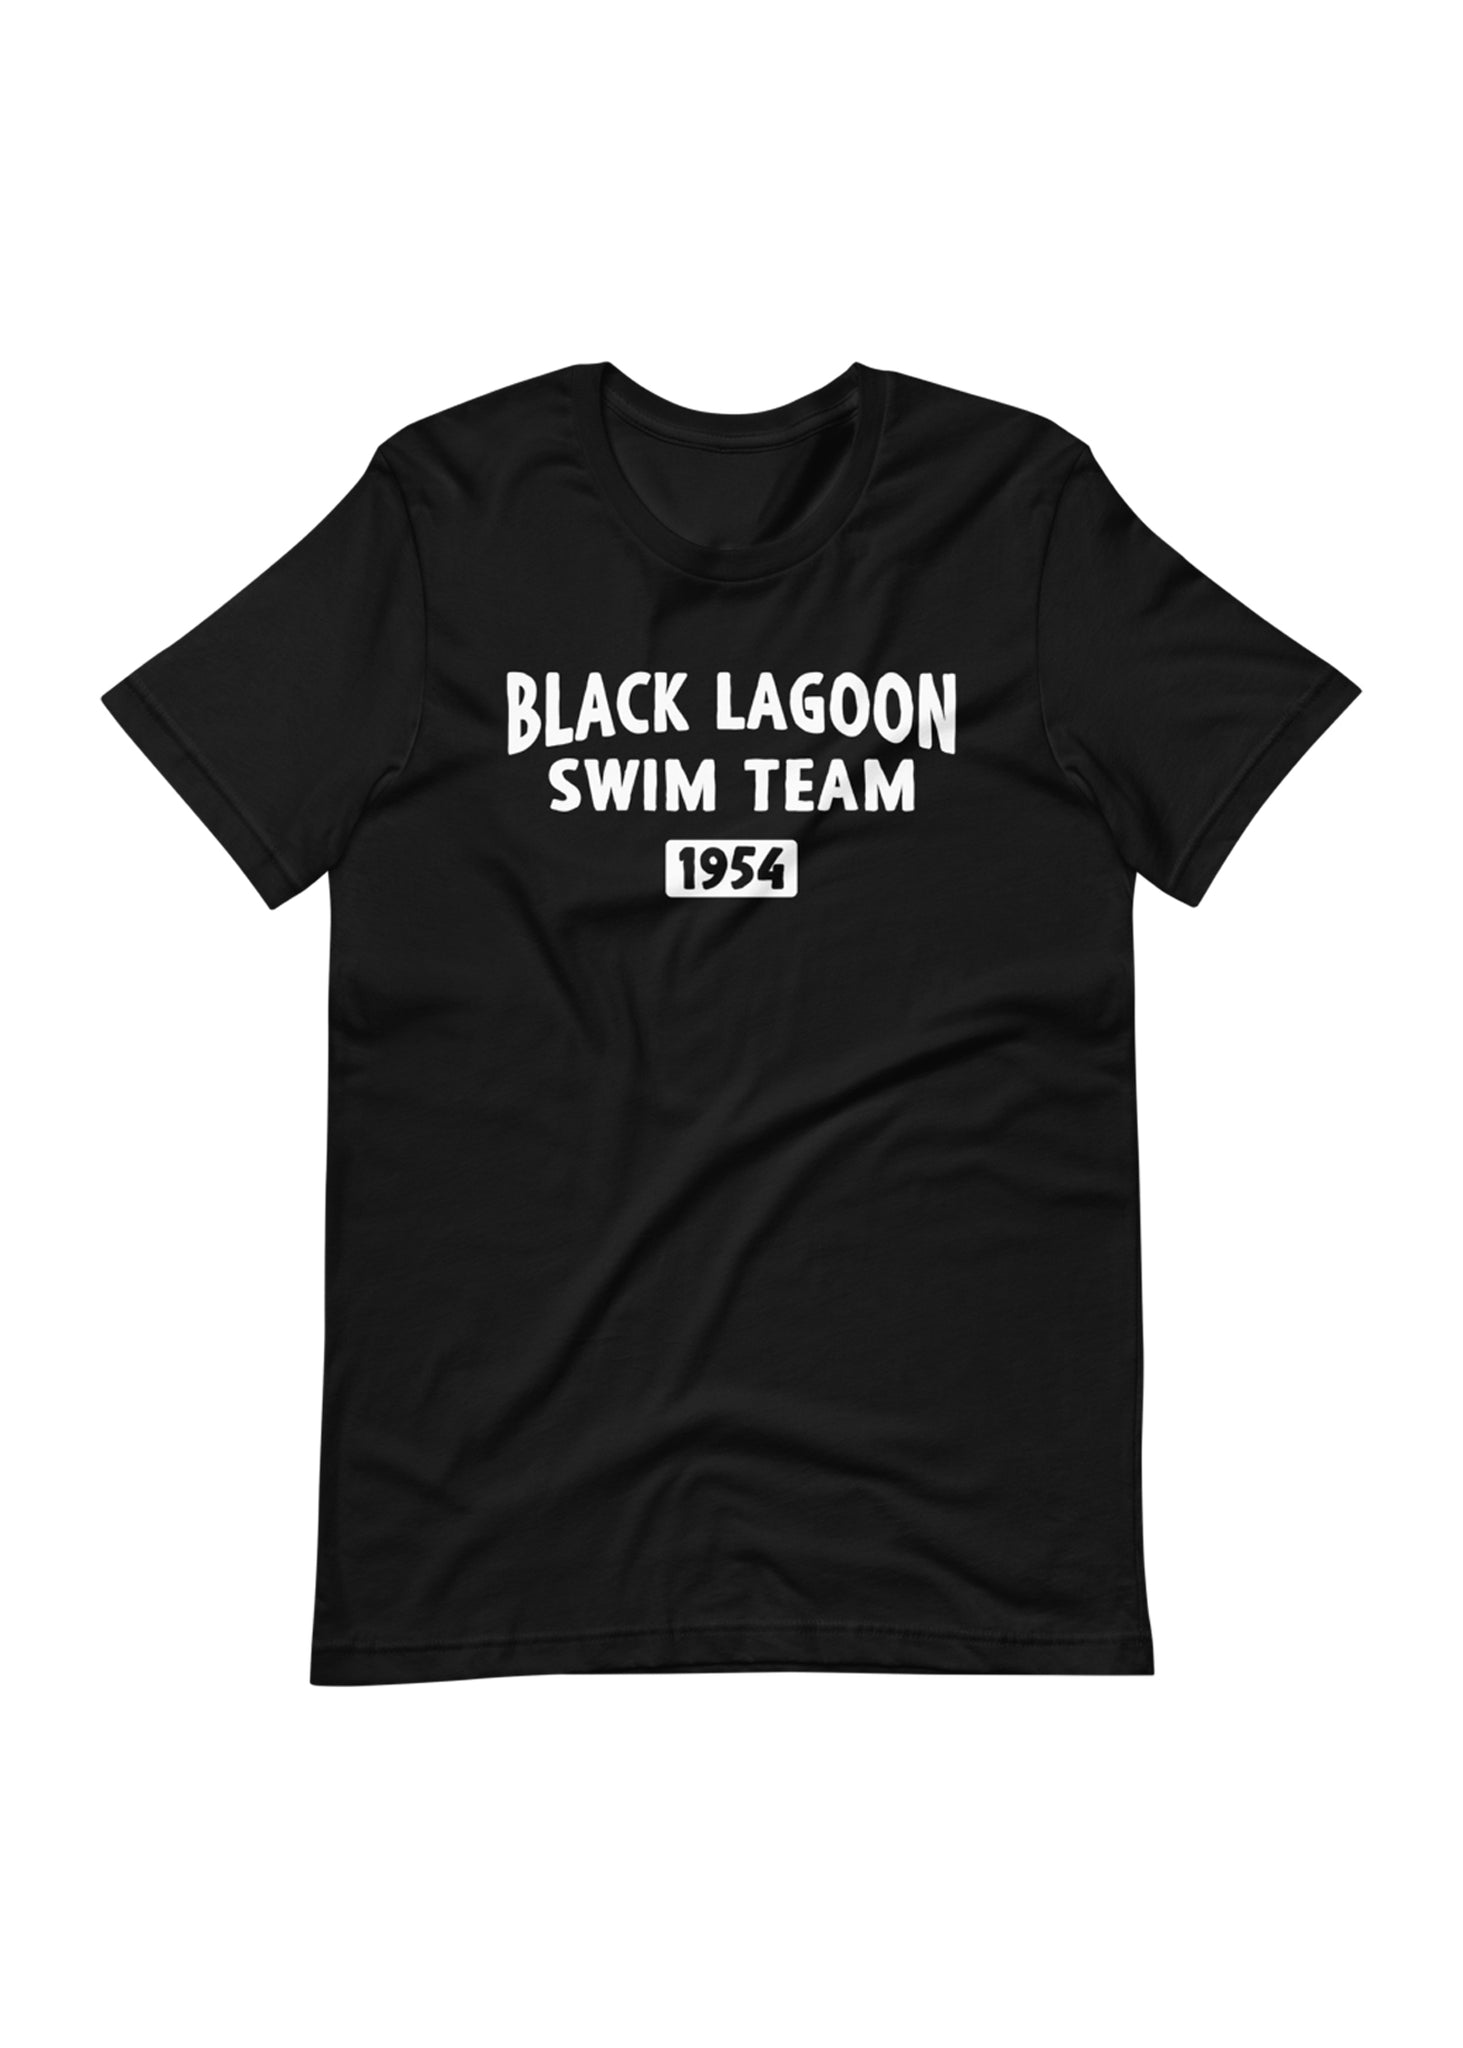 Black Lagoon Swim Team Unisex Adult T-Shirt in Black